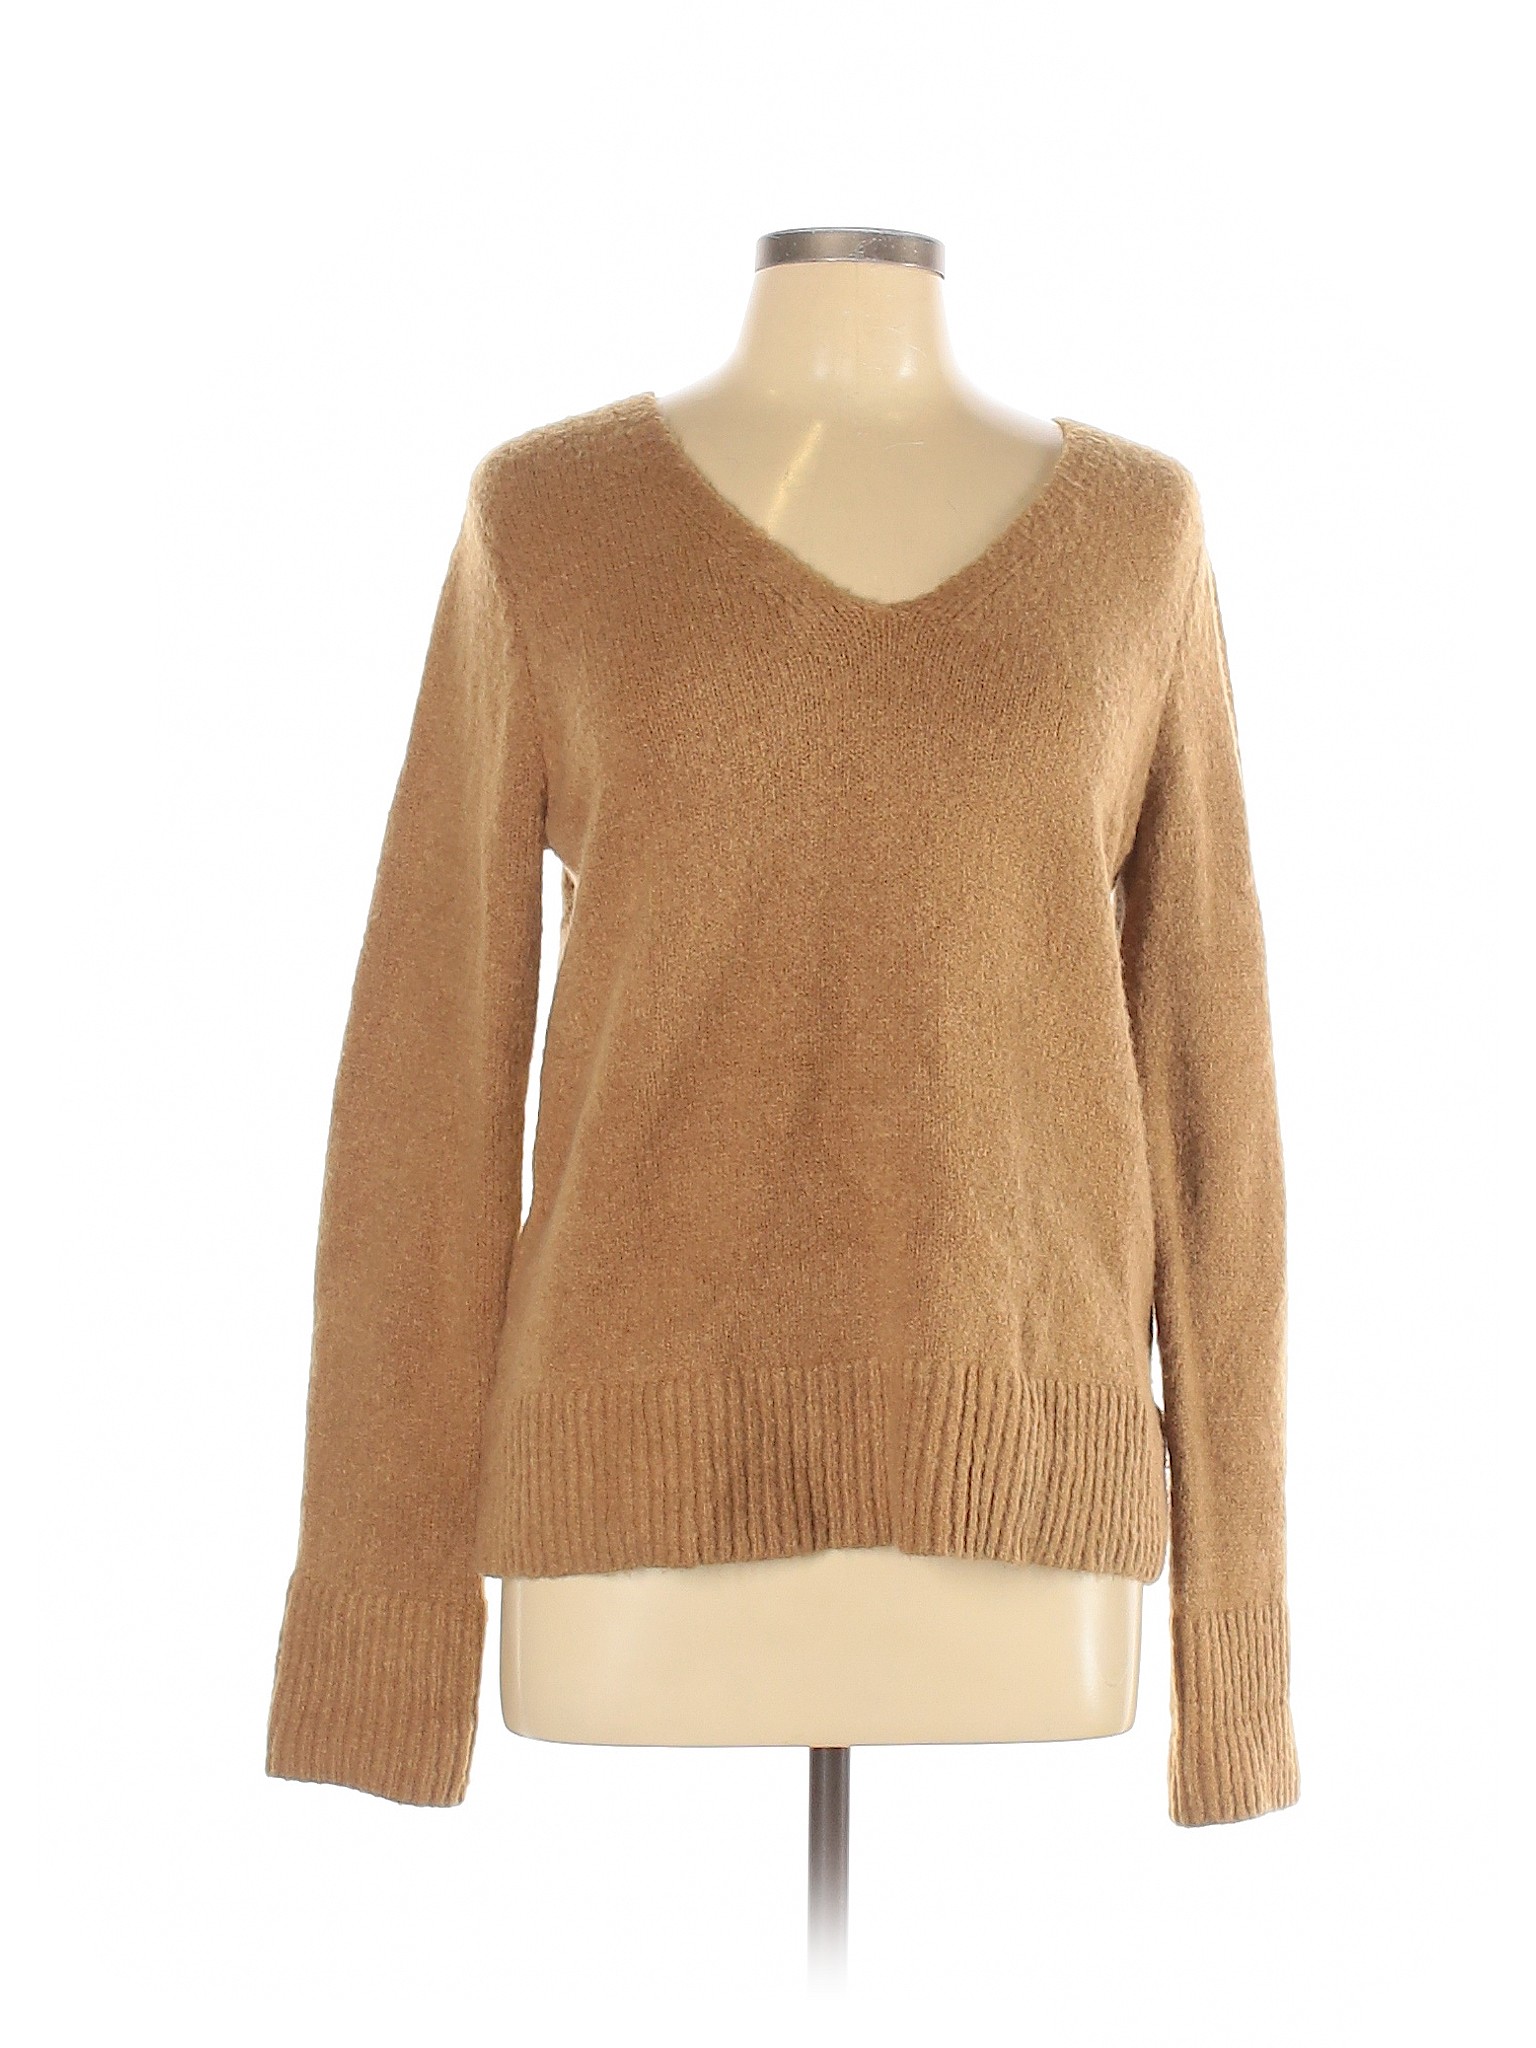 Tahari Women Brown Pullover Sweater L | eBay